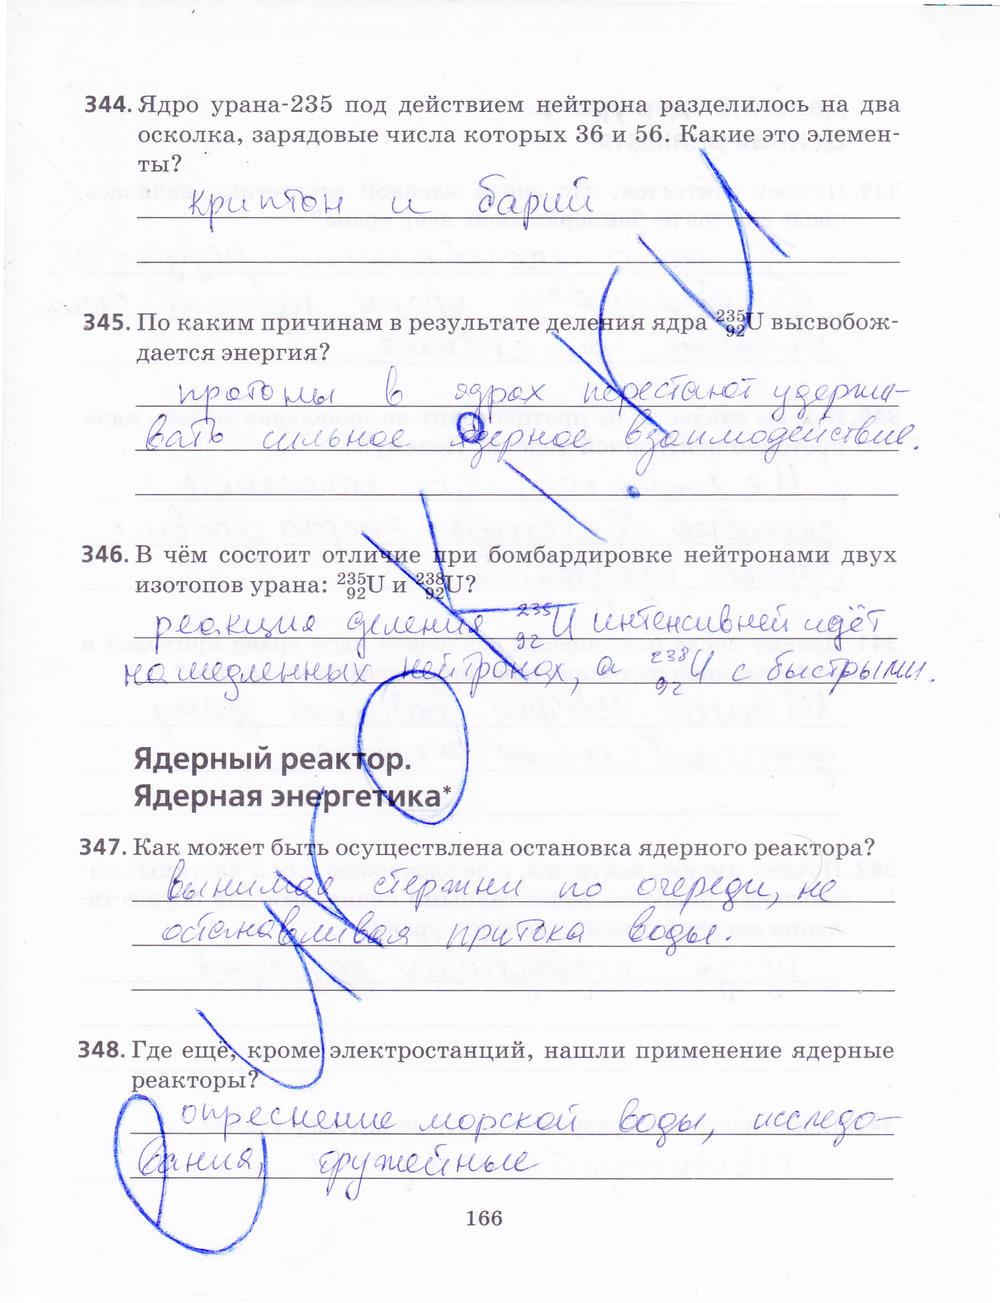 гдз 9 класс рабочая тетрадь страница 166 физика Пурышева, Важеевская, Чаругин